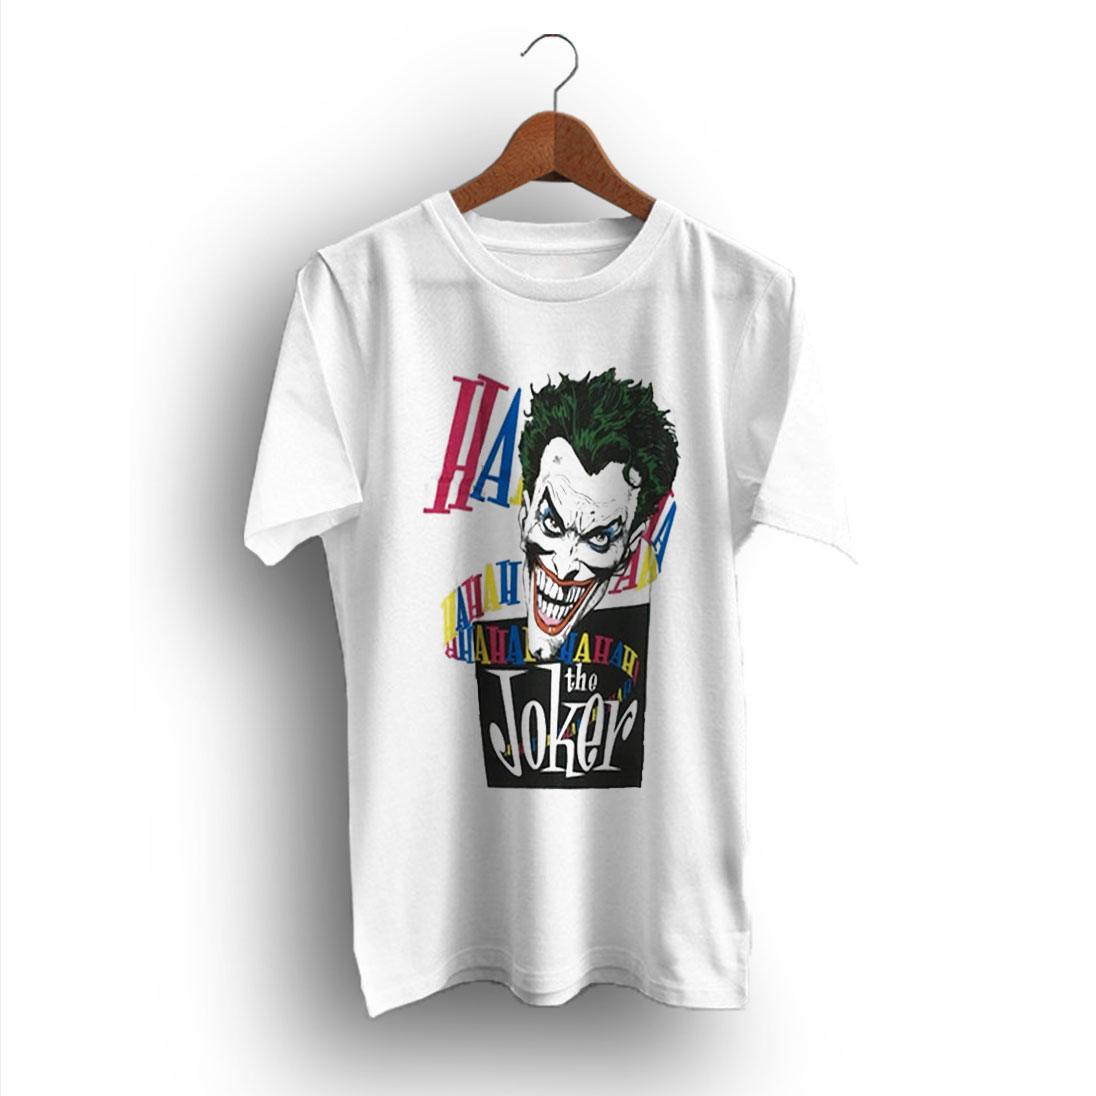 joker hahaha shirt